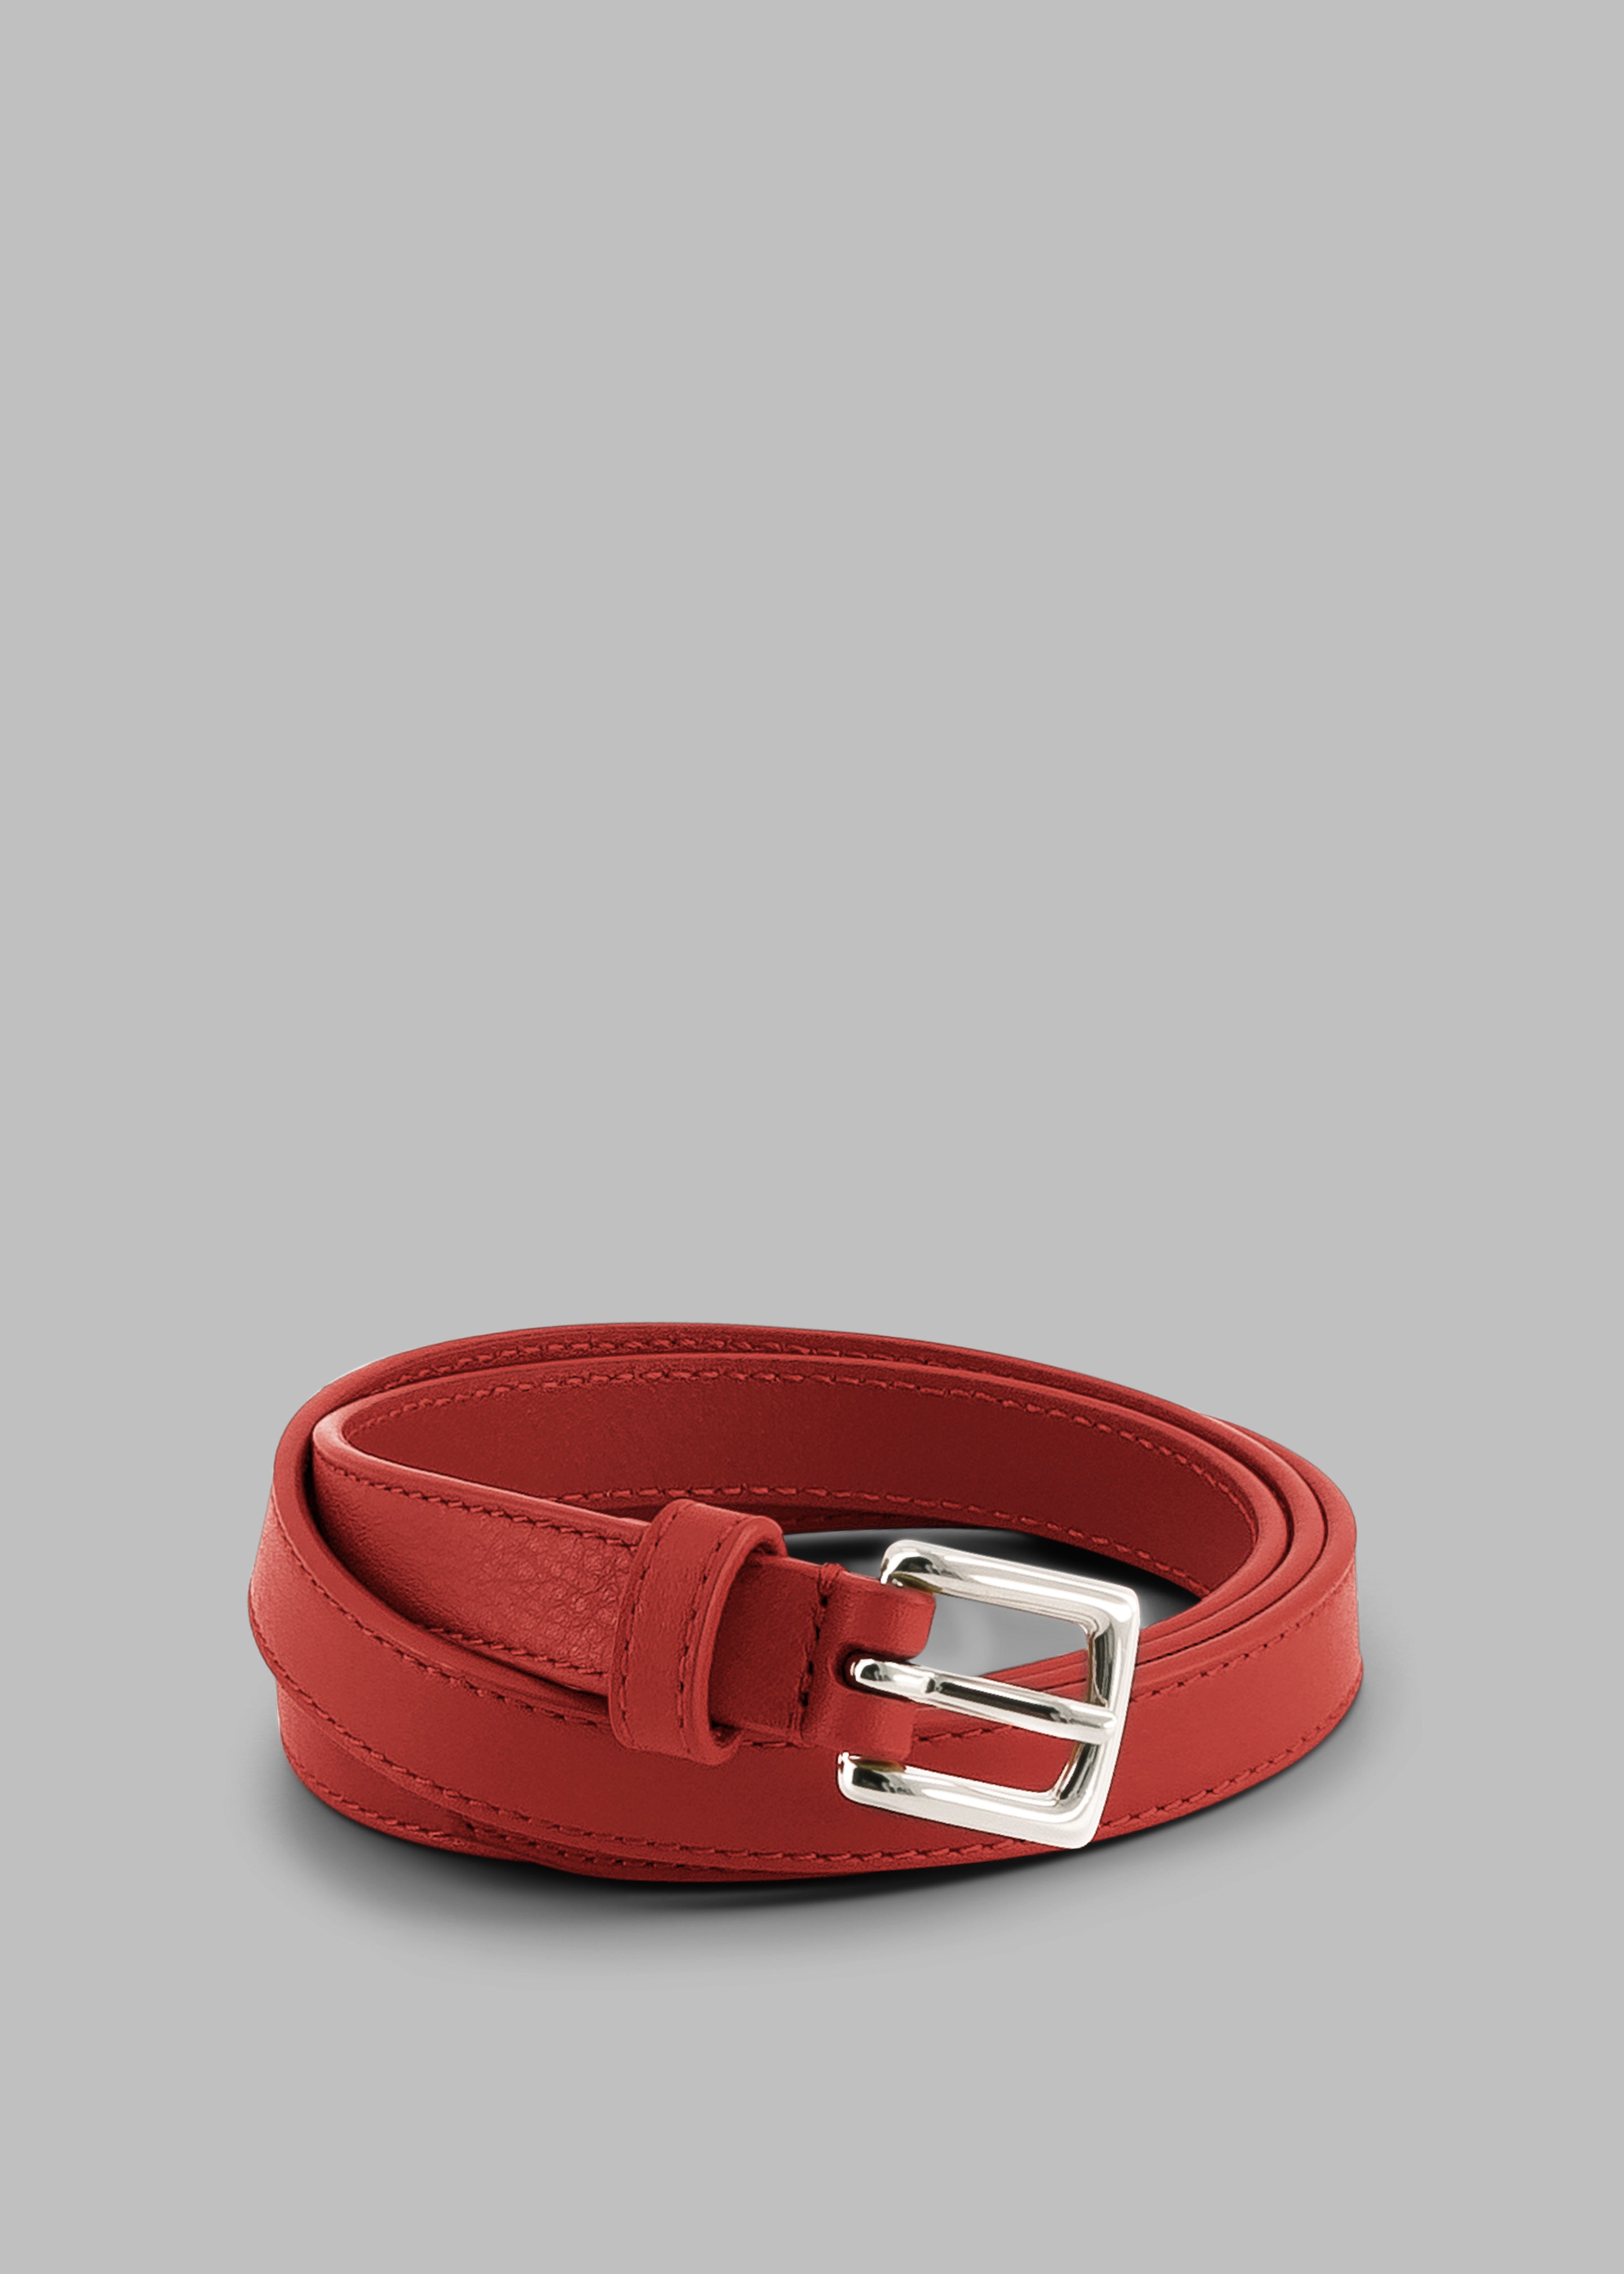 Jessie Leather Belt - Red - 1